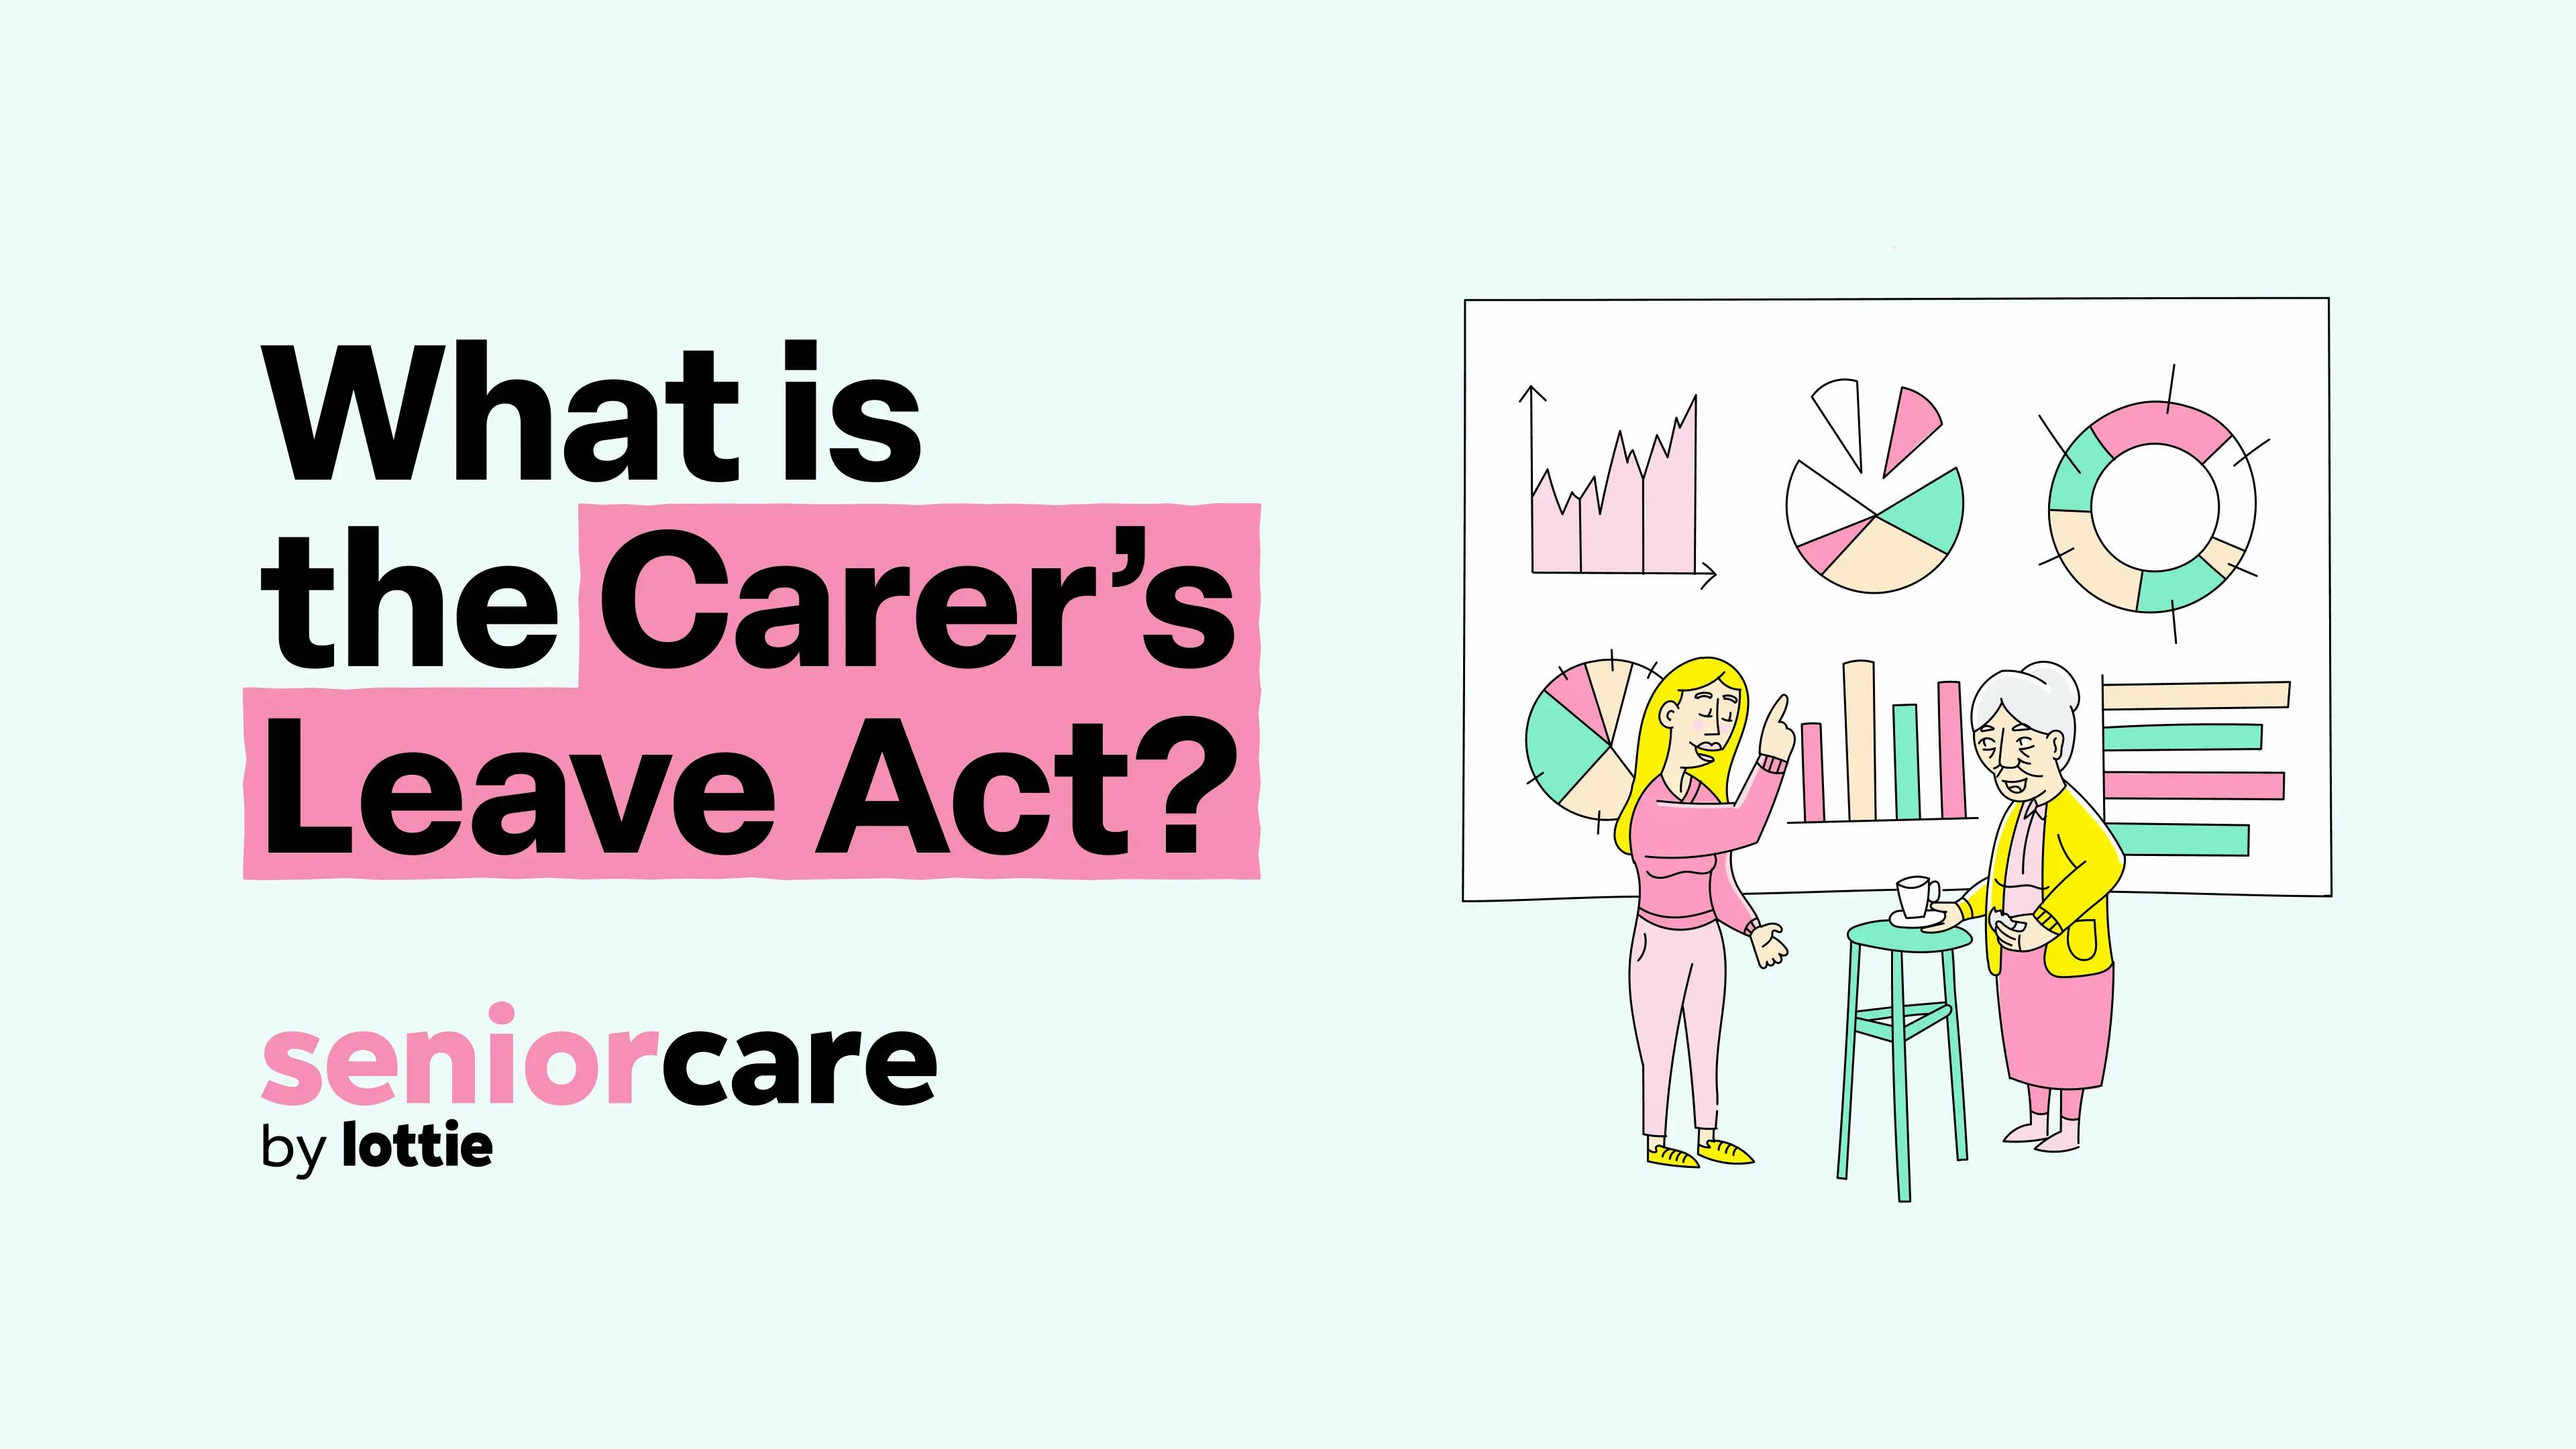 Seniorcare by Lottie explain The Carer's Leave Act